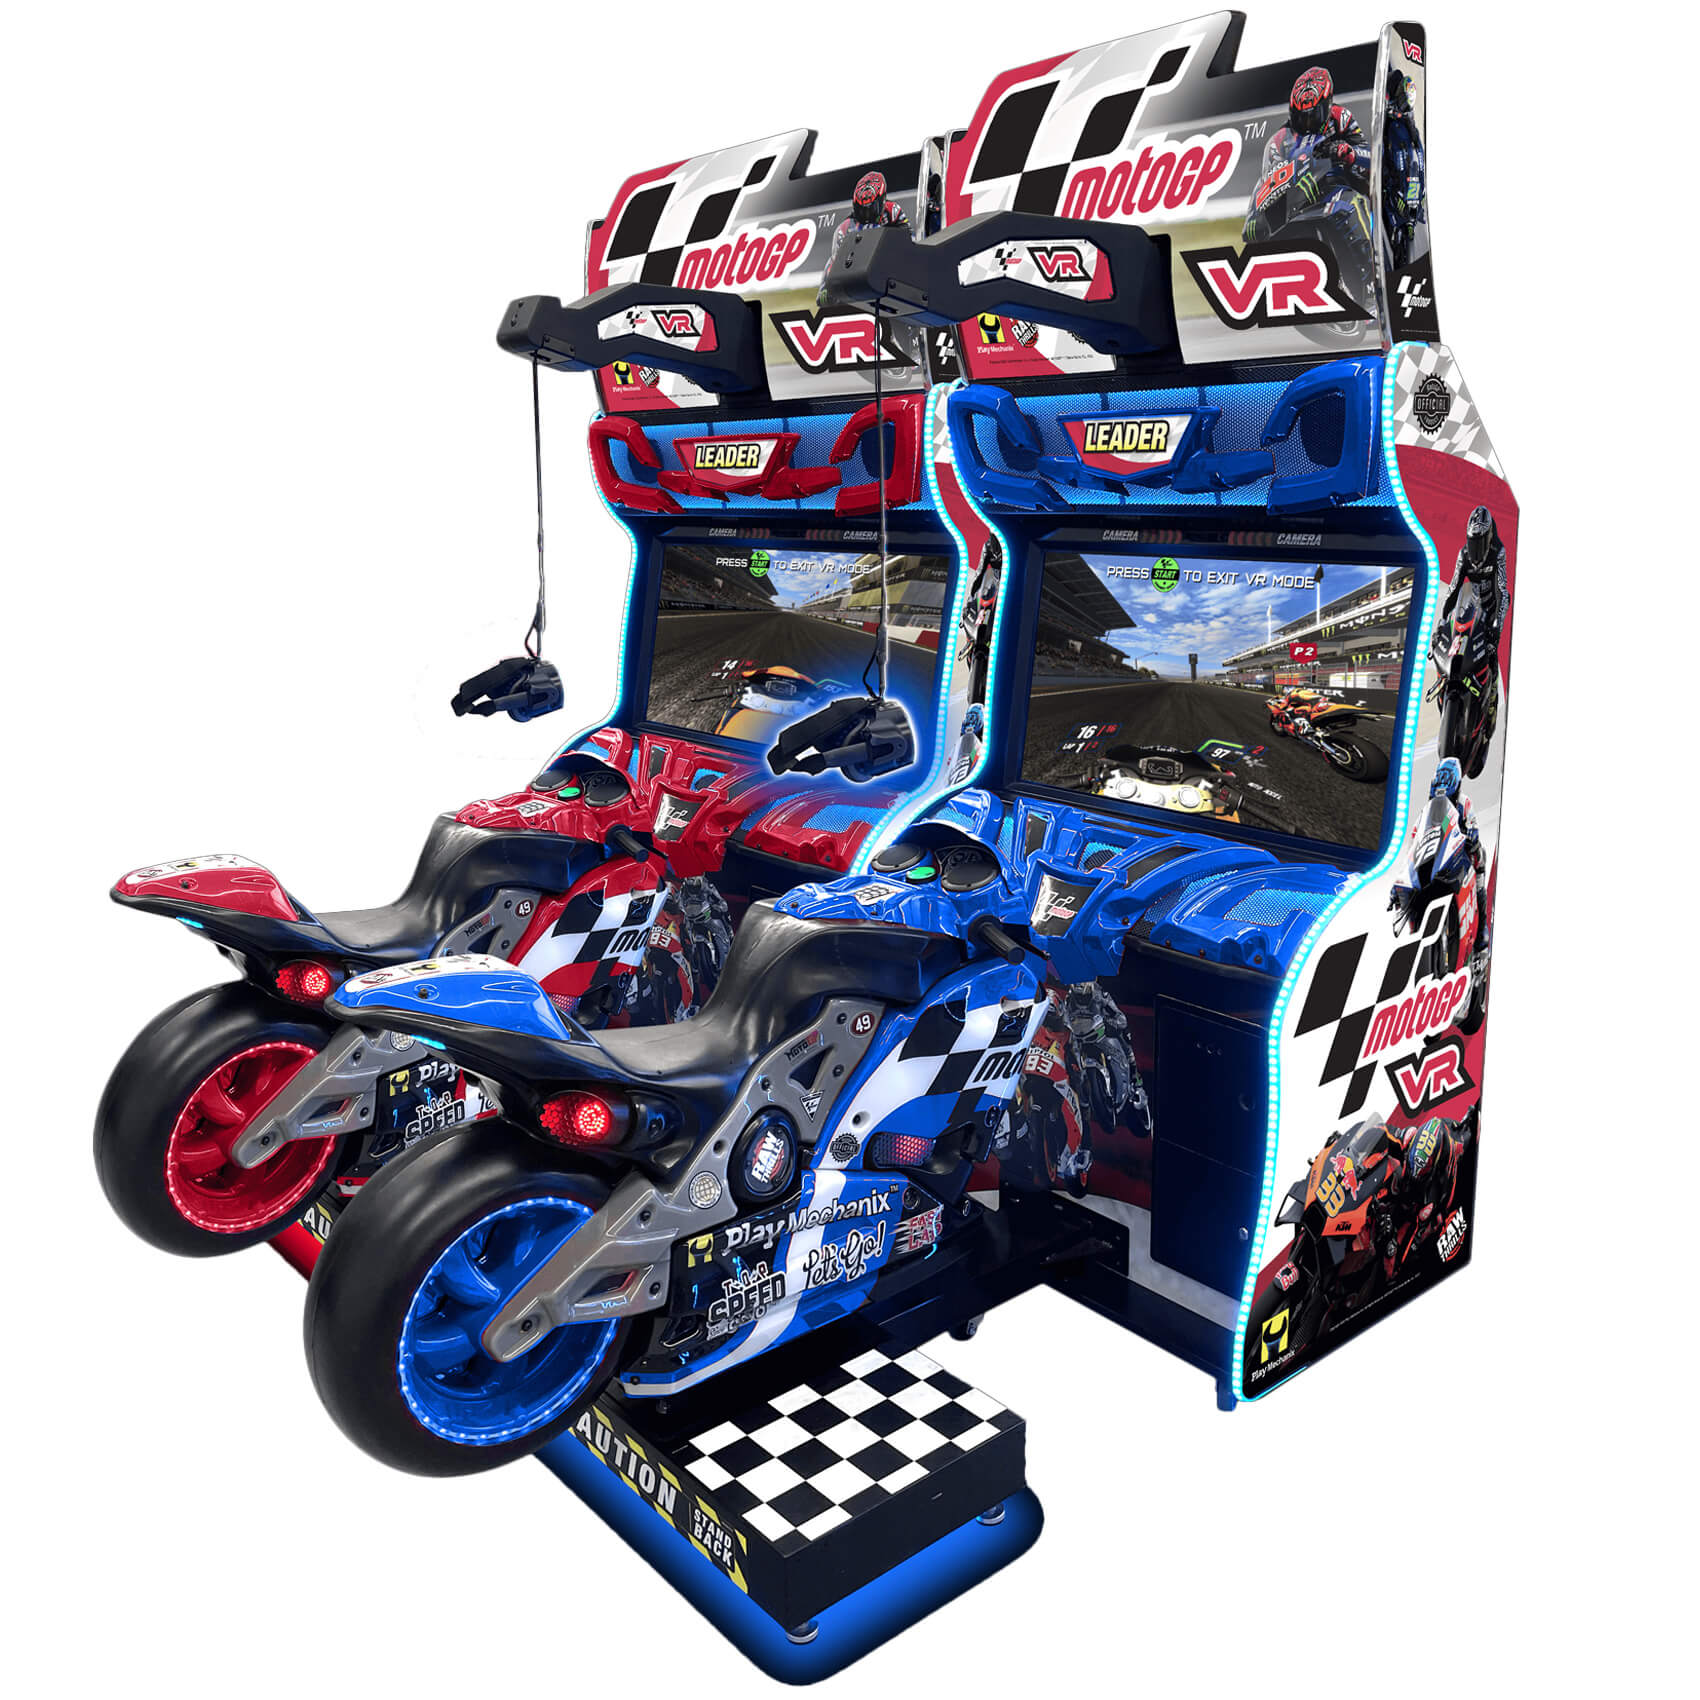 Moto GP Racing Simulator Arcade Machine Red Thailand Pool